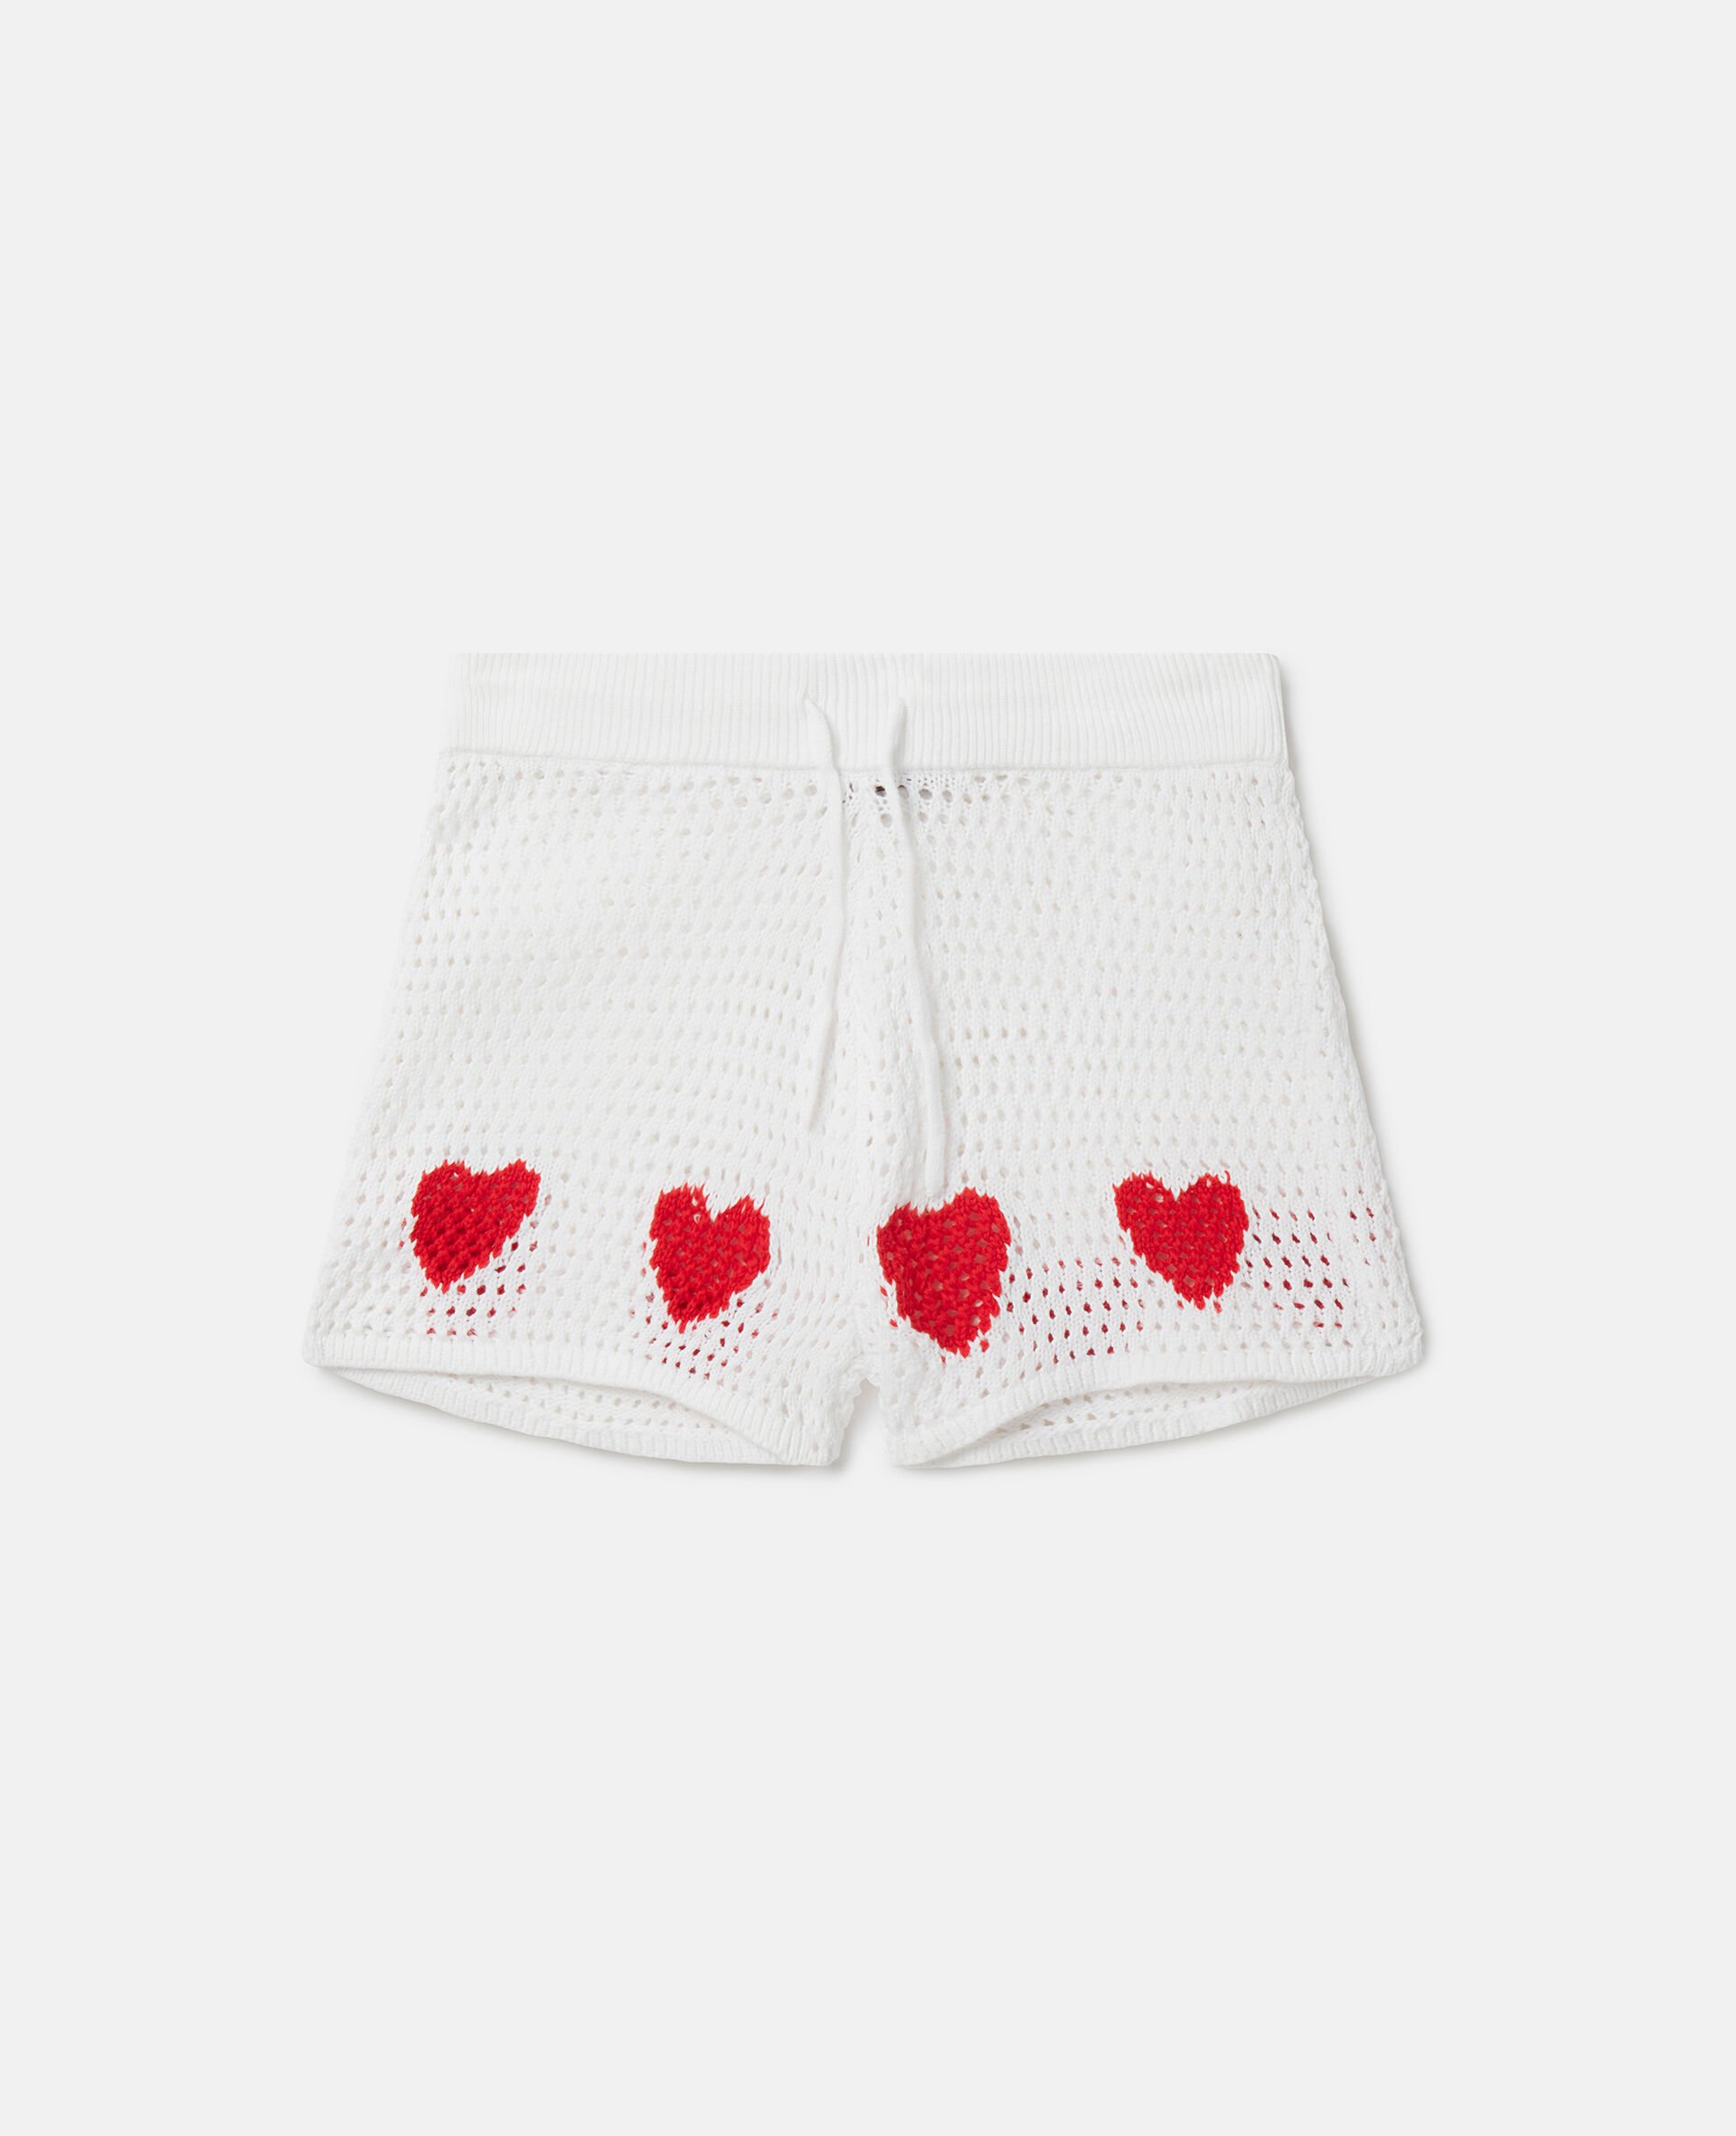 Heart Crocheted Shorts-White-large image number 0